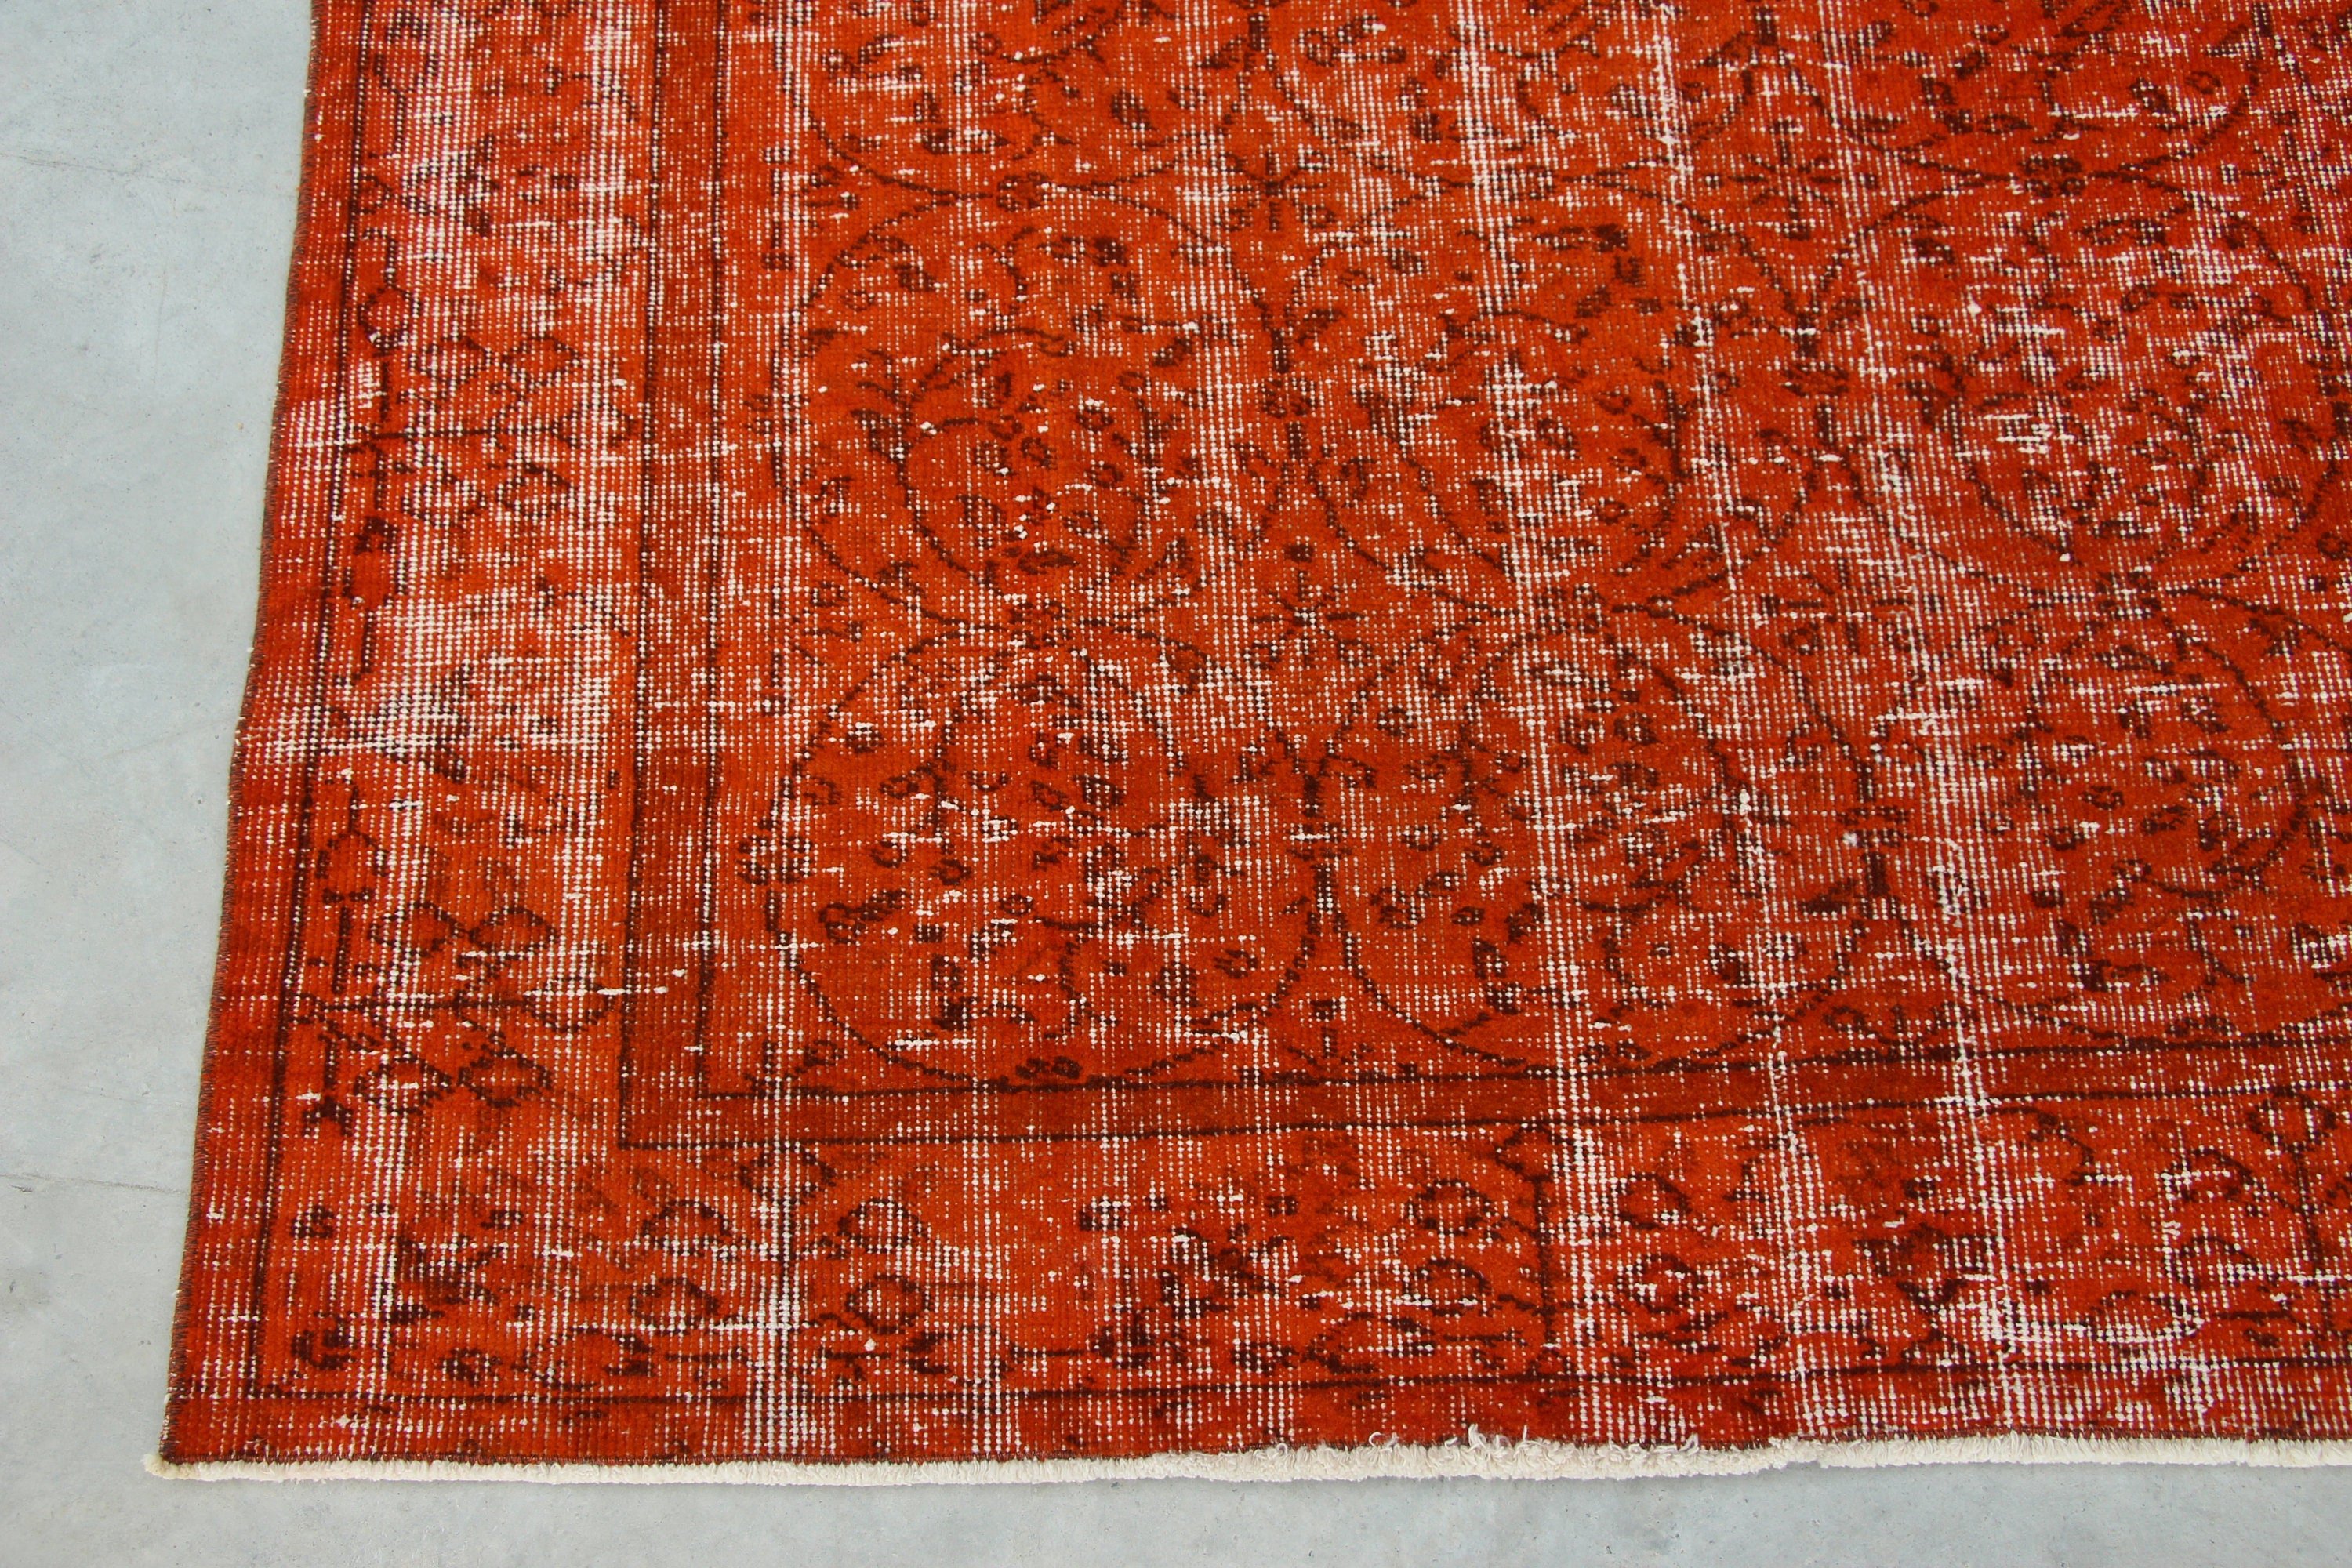 Orange Moroccan Rug, Bedroom Rug, Art Rug, 4.9x8.9 ft Large Rugs, Turkish Rug, Living Room Rug, Oushak Rugs, Vintage Rugs, Home Decor Rug